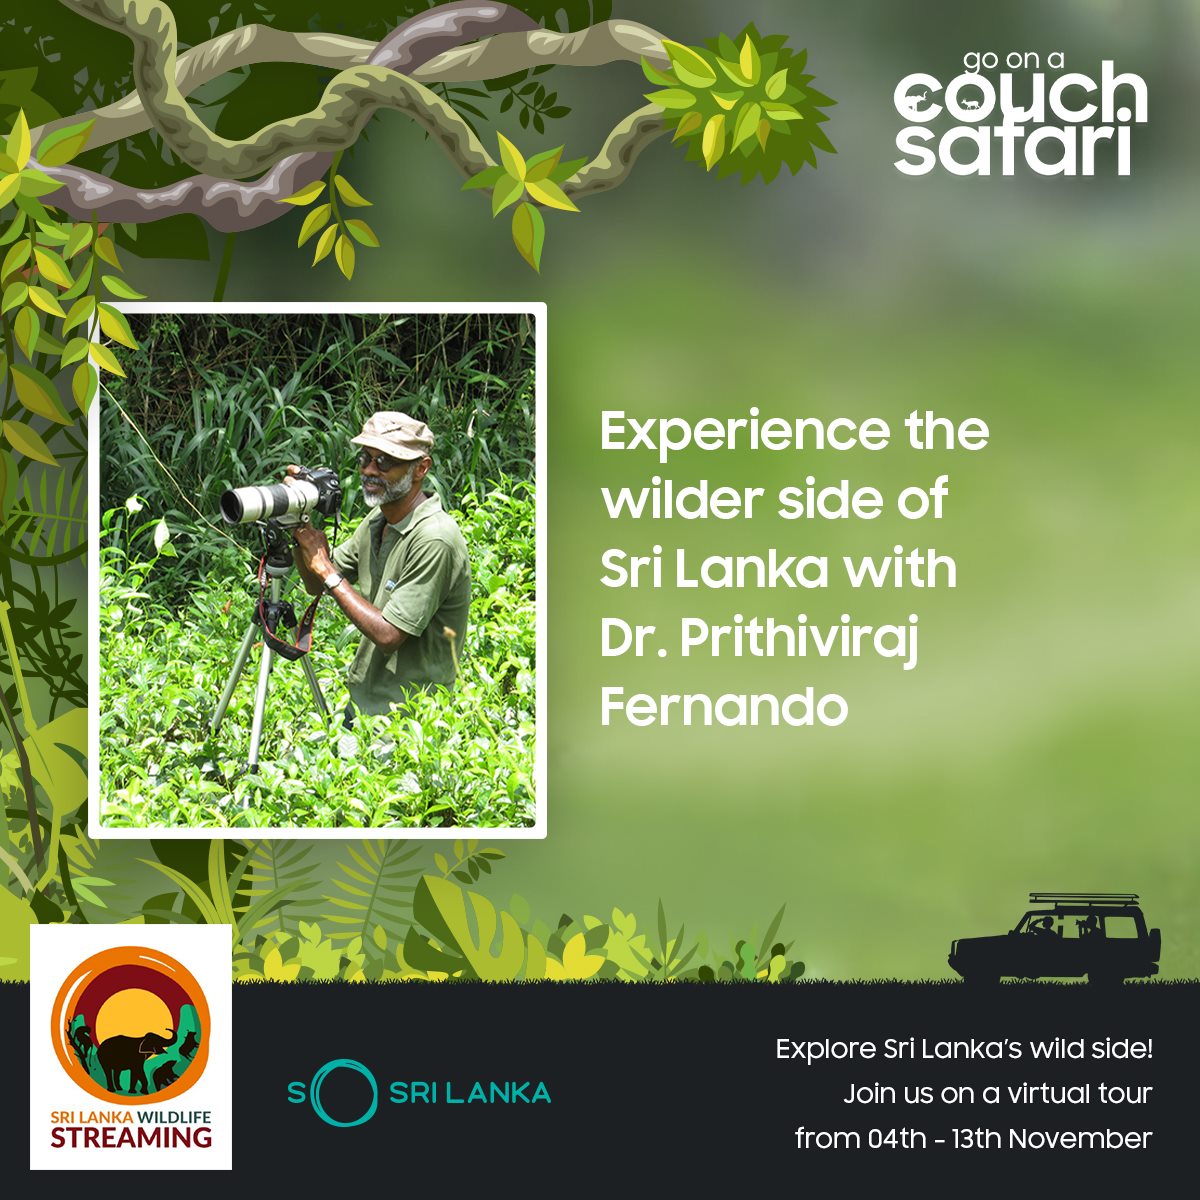 Experience the wilder side of Sri Lanka with Dr. Prithiviraj Fernando